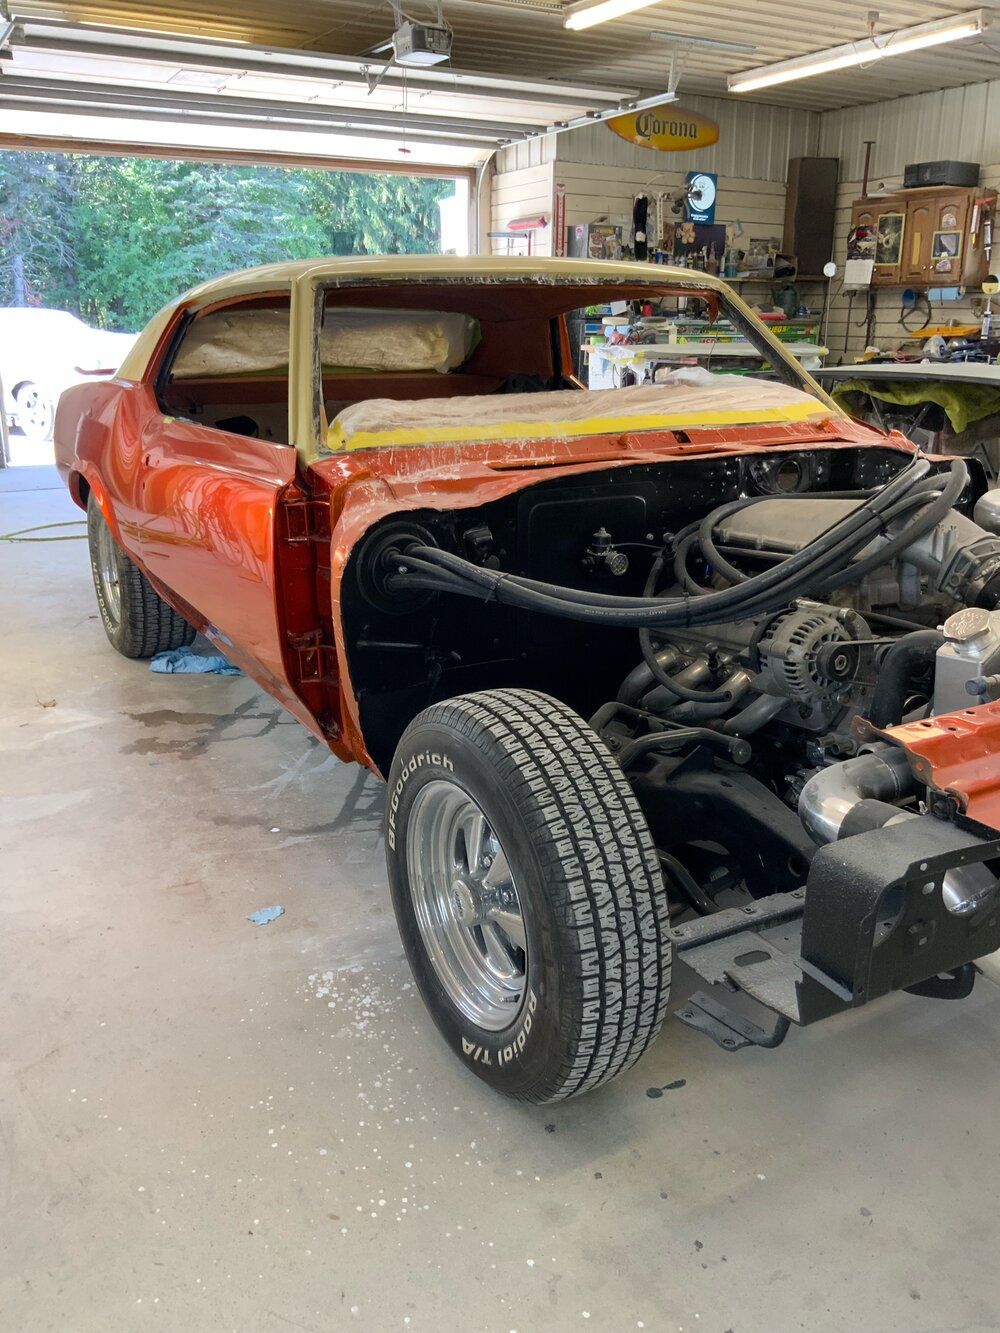 1972-Cutlass-old-car-restoration-hot-rod-factory-cars-bodywork-rebuild(60).png